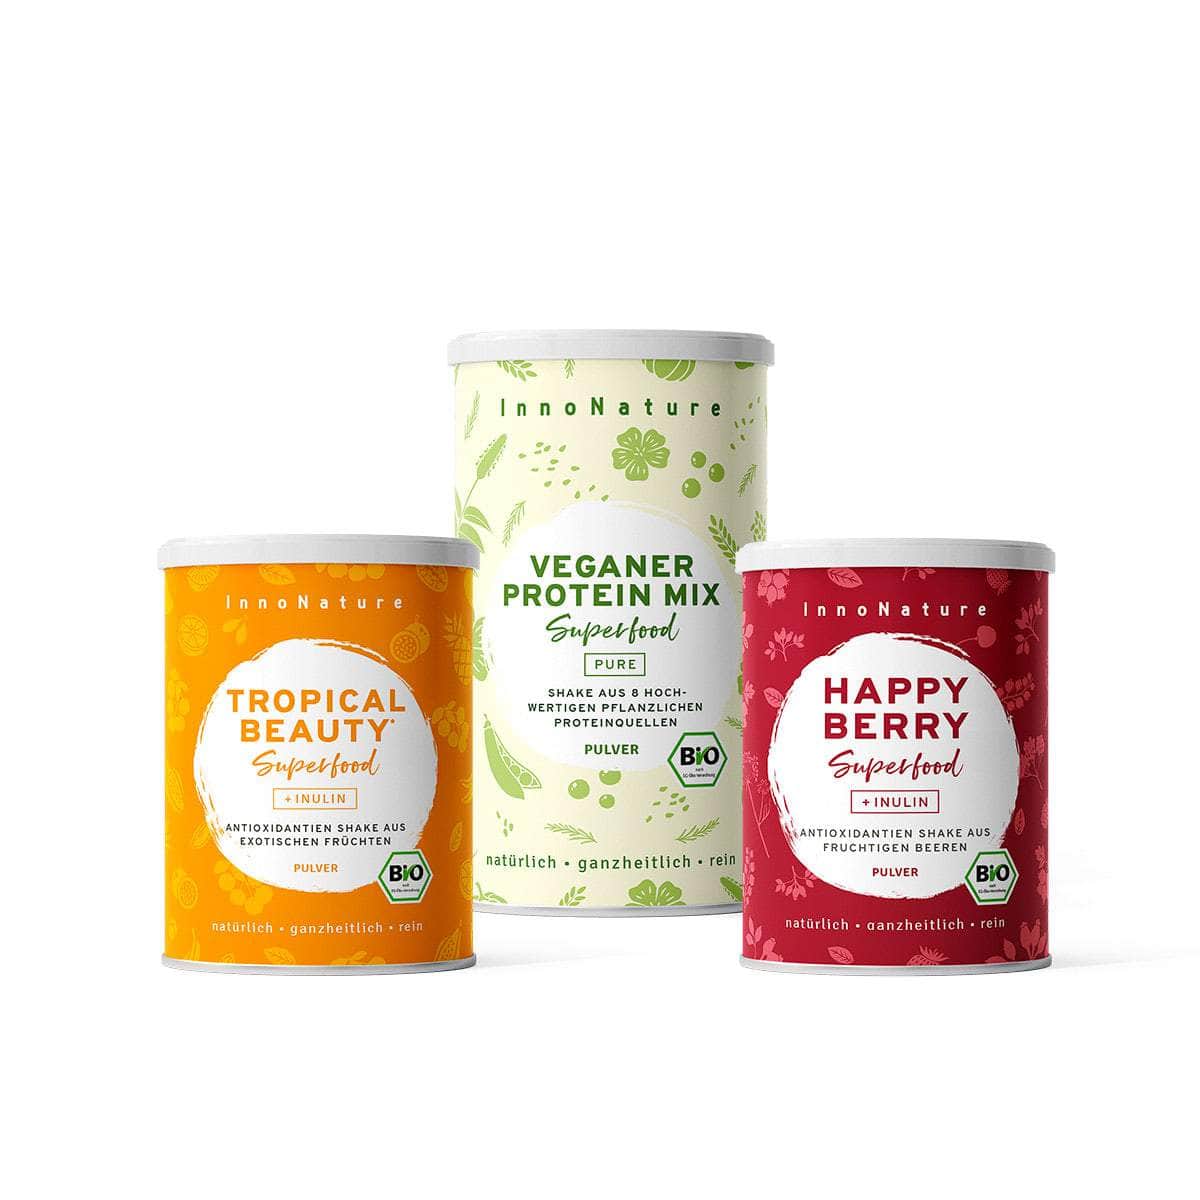 InnoNature Pakete 1x Veganer Protein Mix Pure, 1x Happy Berry, 1x Tropical Beauty Mix & Match-Paket